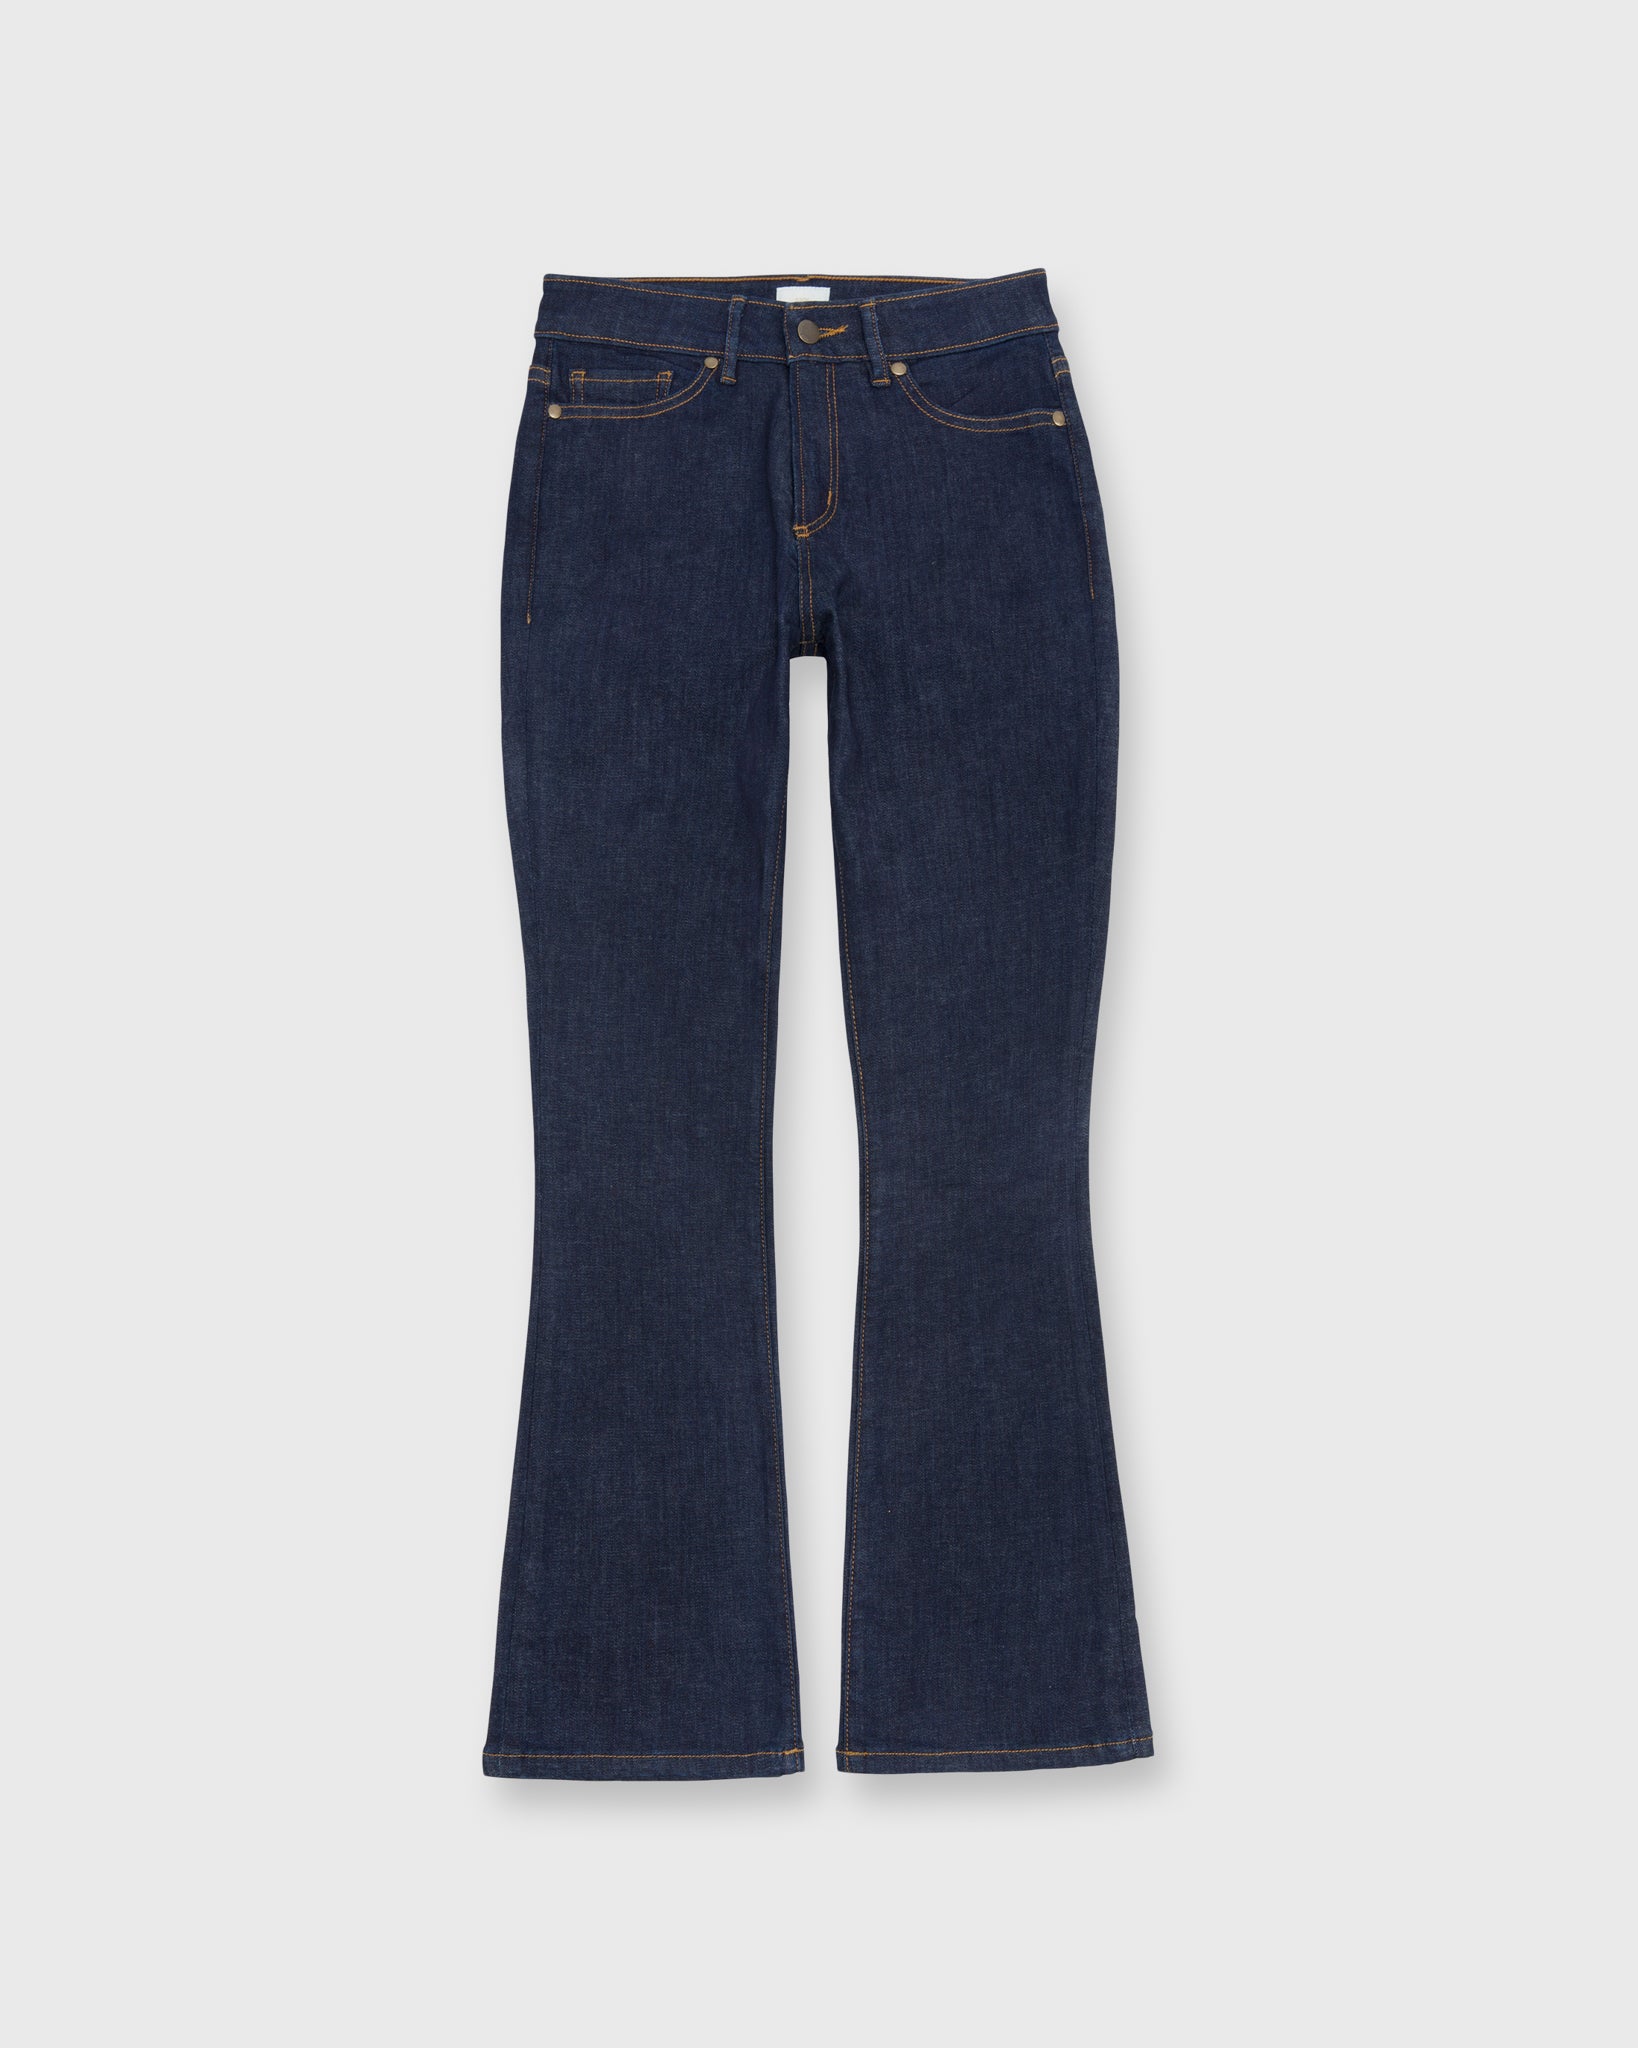 Flare Cropped 5-Pocket Jean in Indigo Stretch Denim